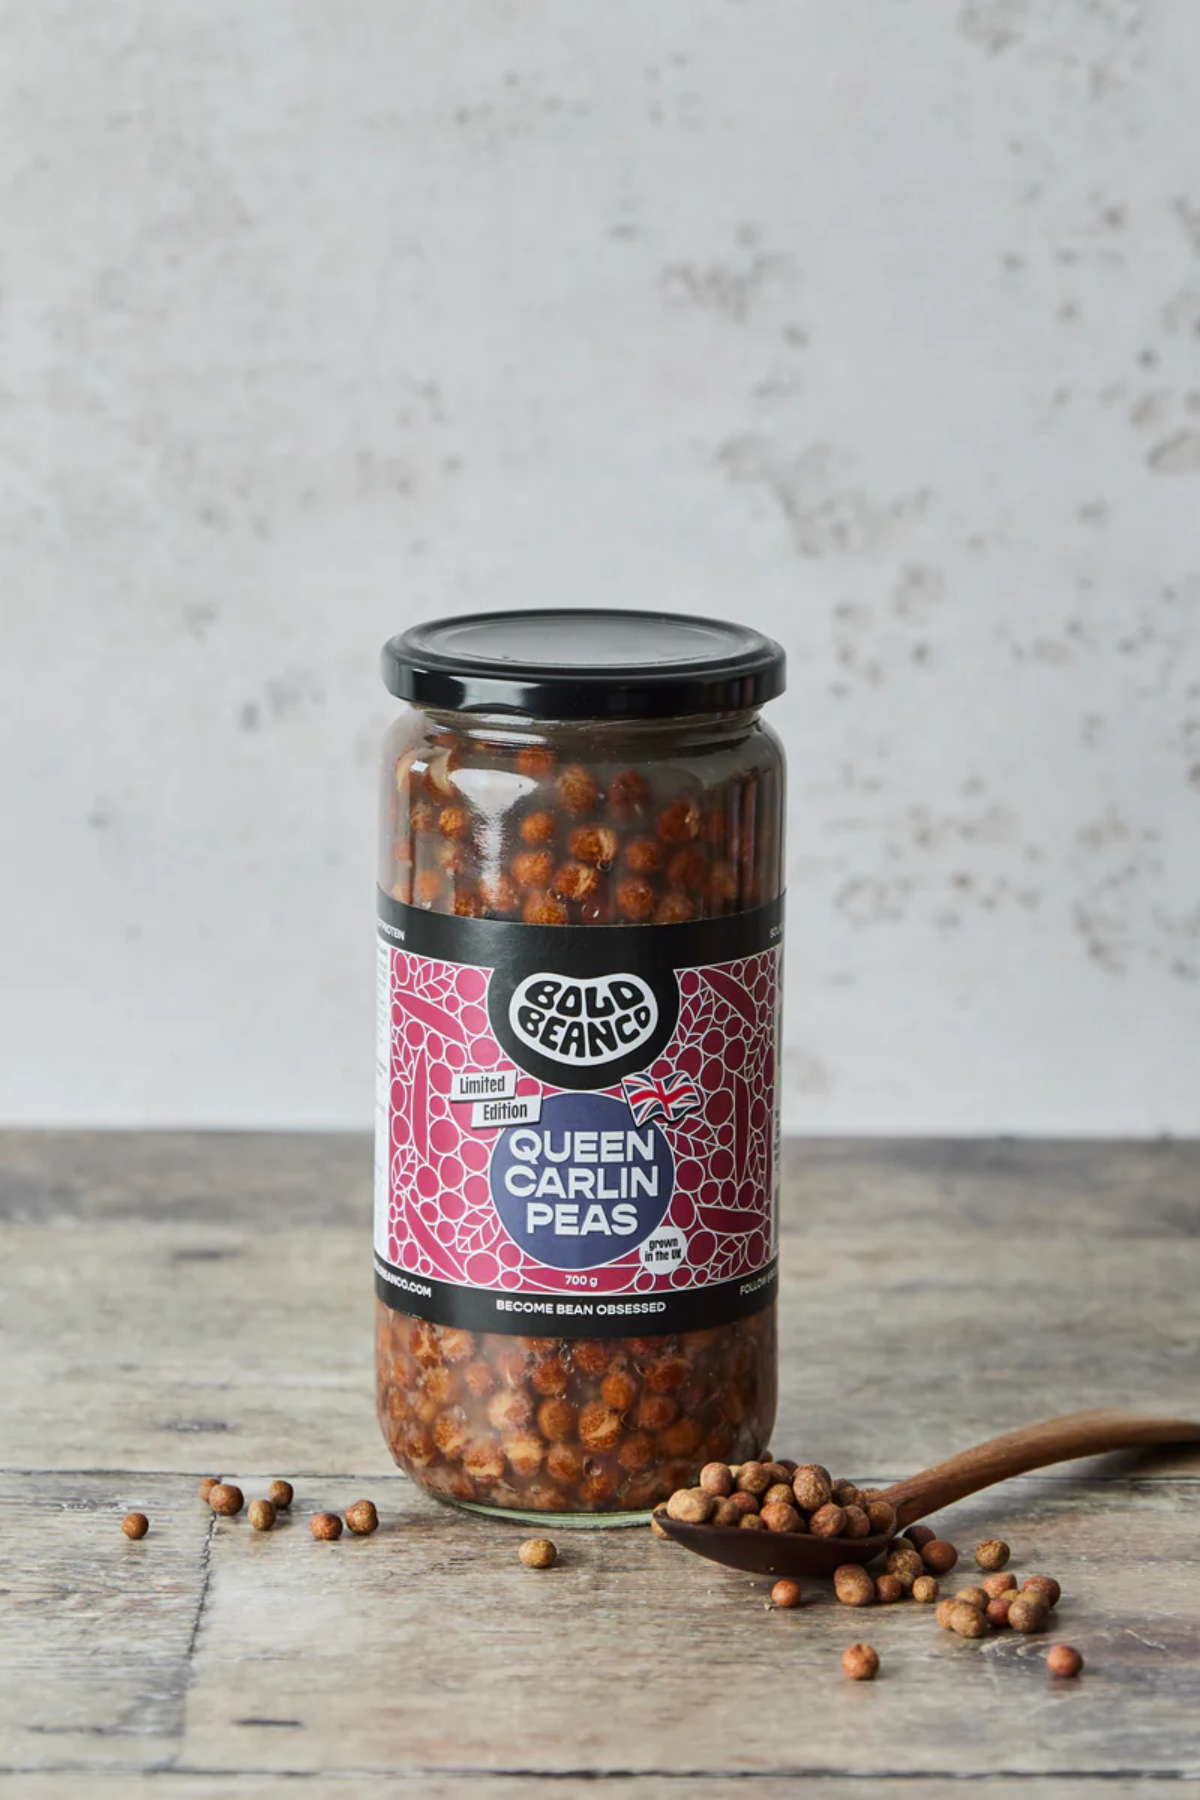 Carlin peas in a bold bean company jar.